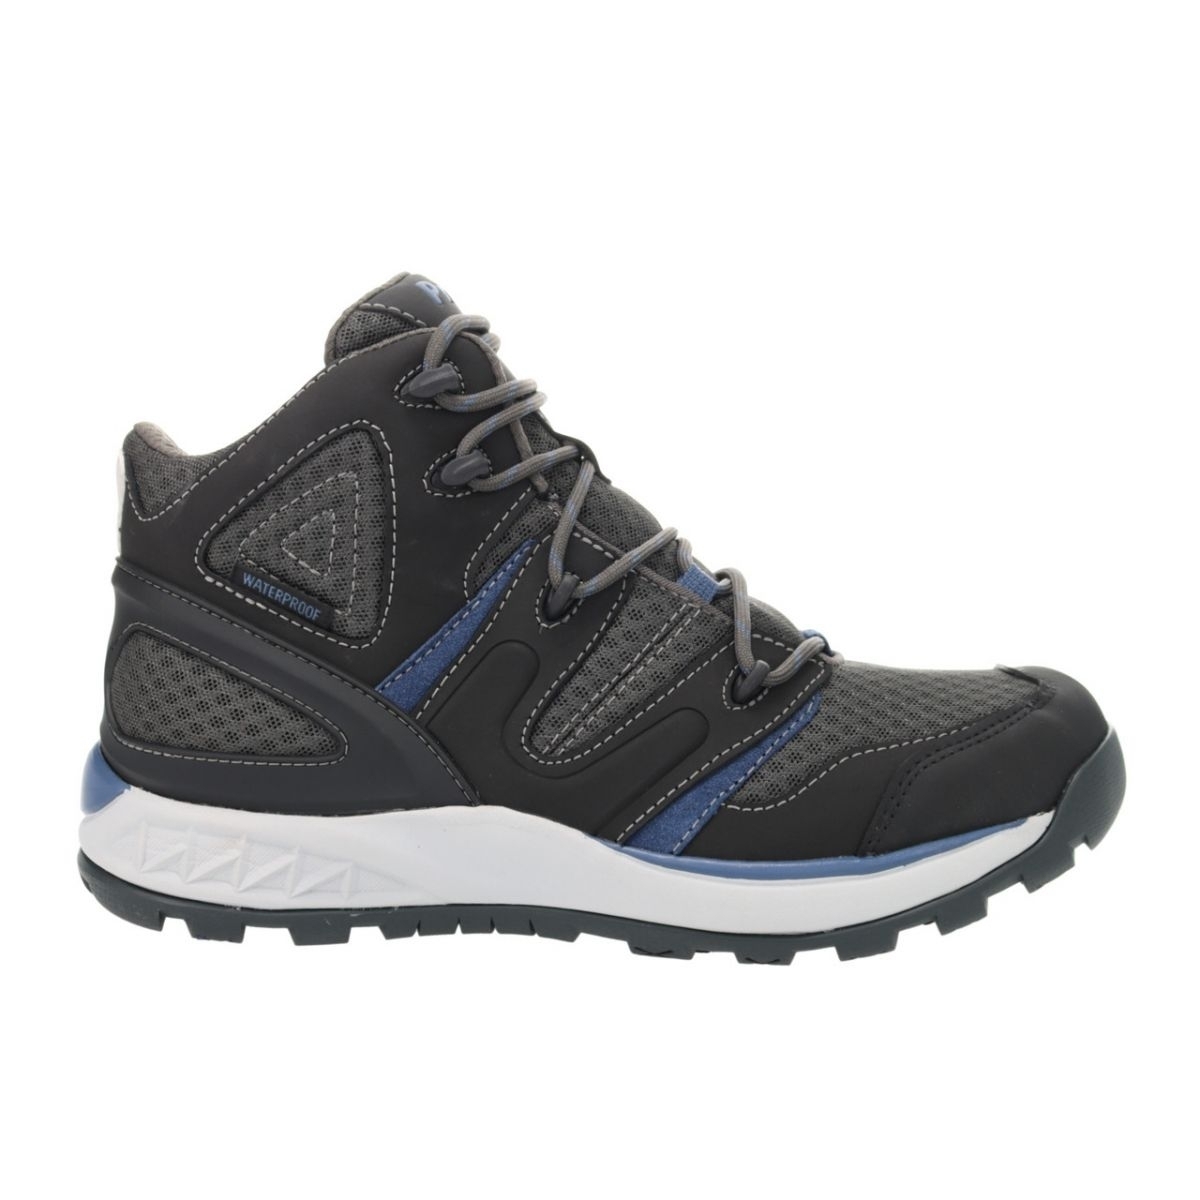 Propet Men's Veymont Waterproof Hiking Boot Grey/Blue - MOA022SGRB GREY/BLUE - GREY/BLUE, 14 XX-Wide